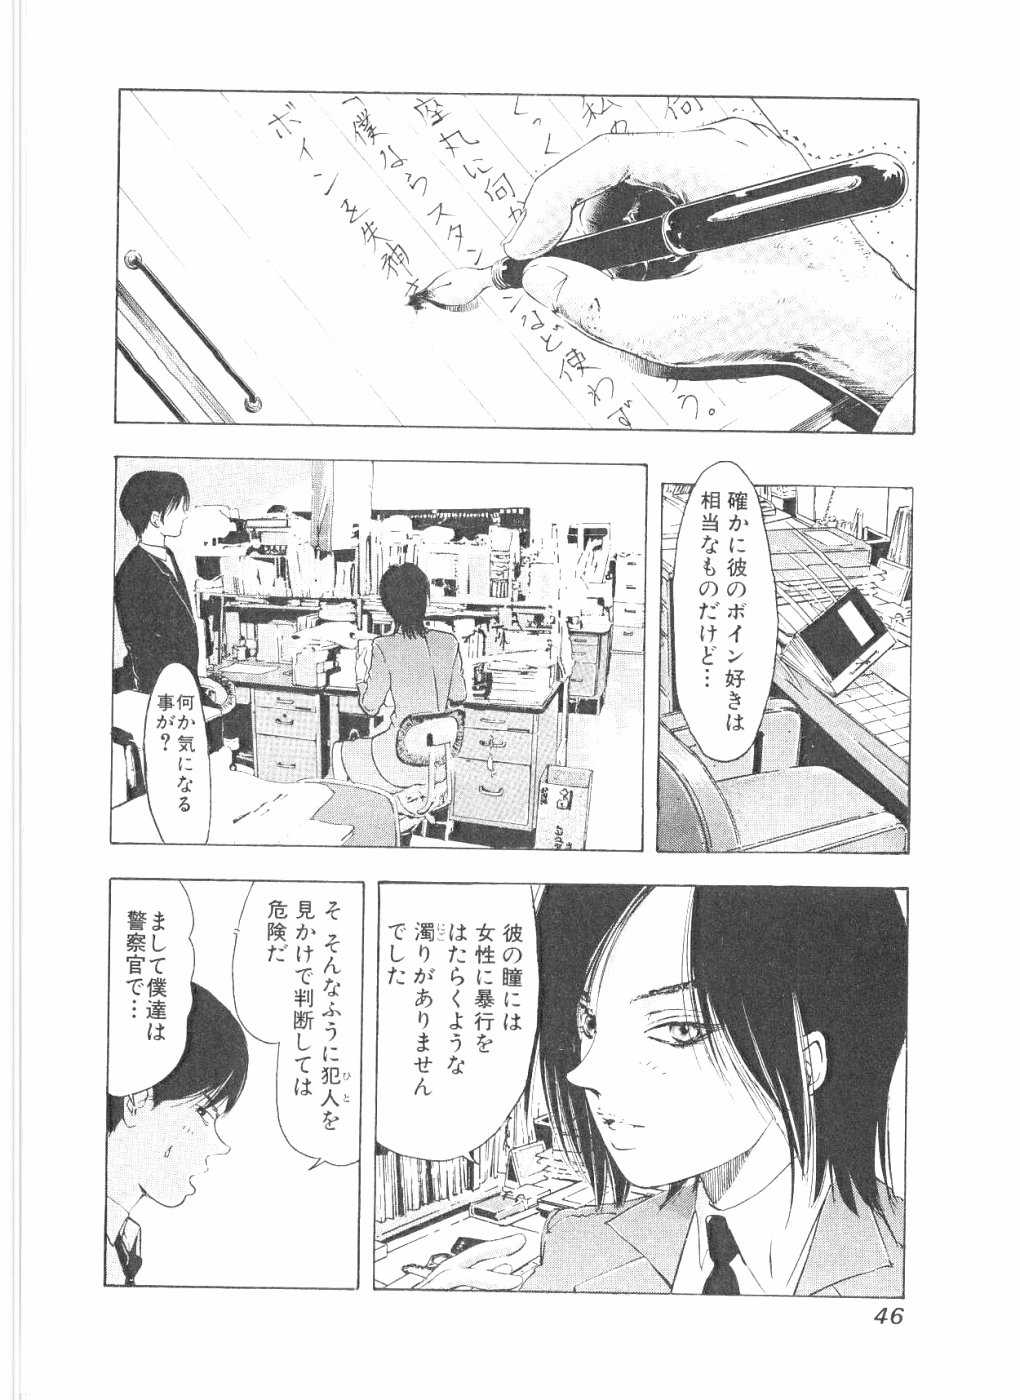 [Yamaguchi Masakazu] BOiNG Vol. 7 